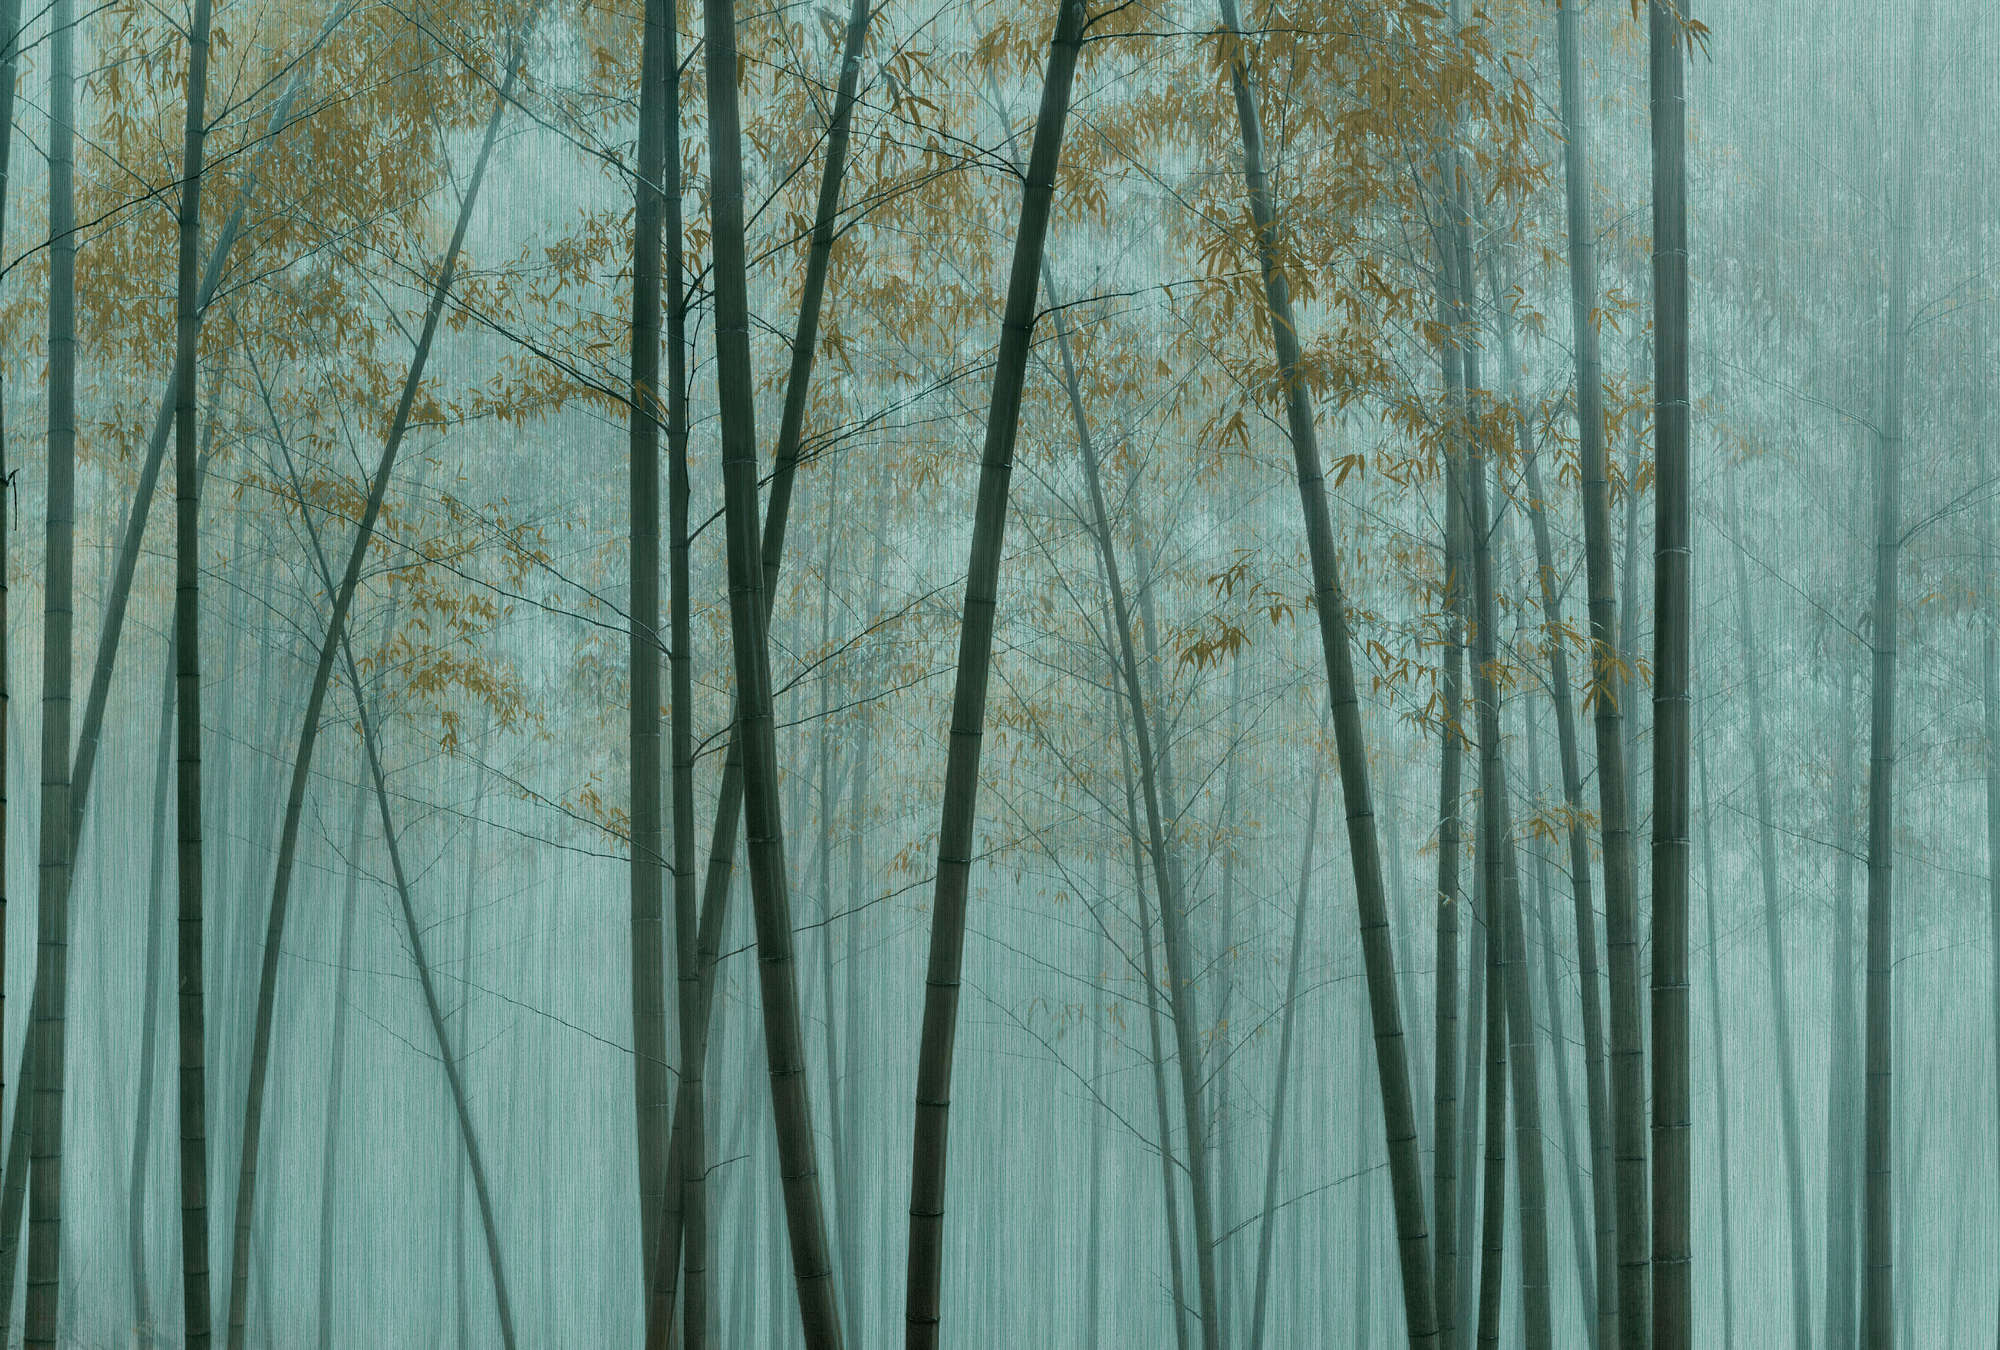             In the Bamboo 3 - Asia foto wallpaper foresta di bambù
        